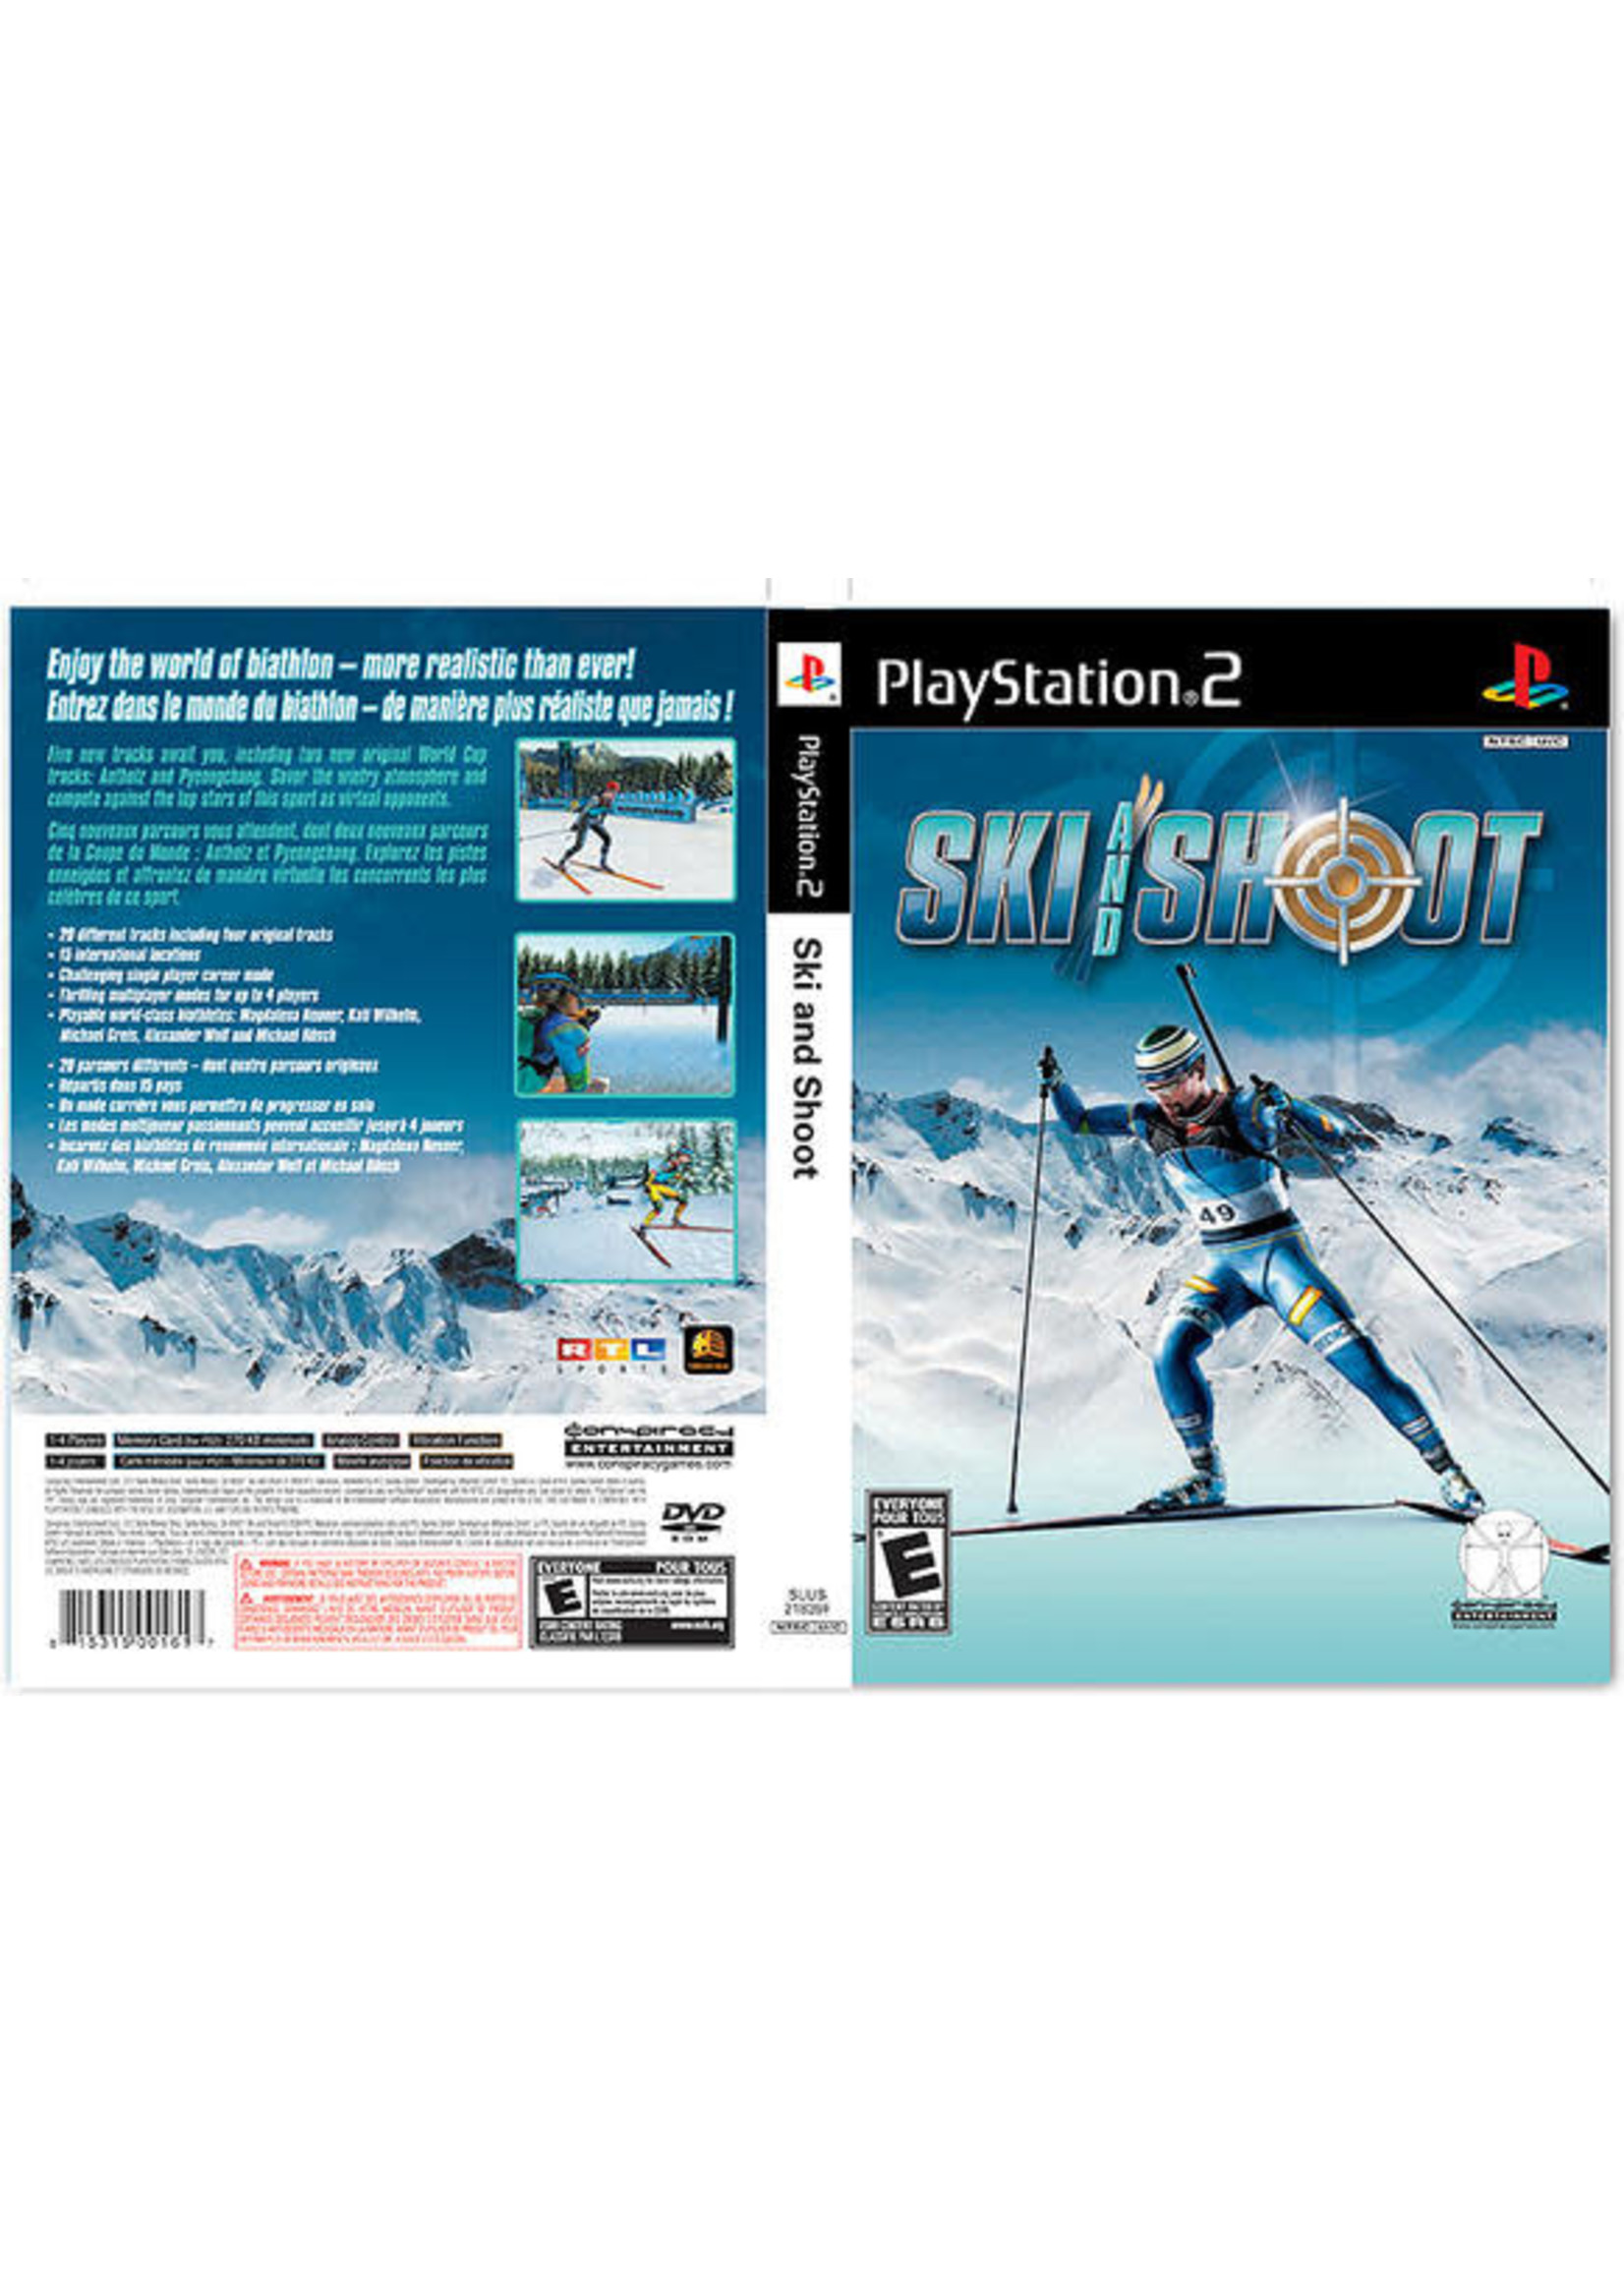 Sony Playstation 2 (PS2) Ski and Shoot